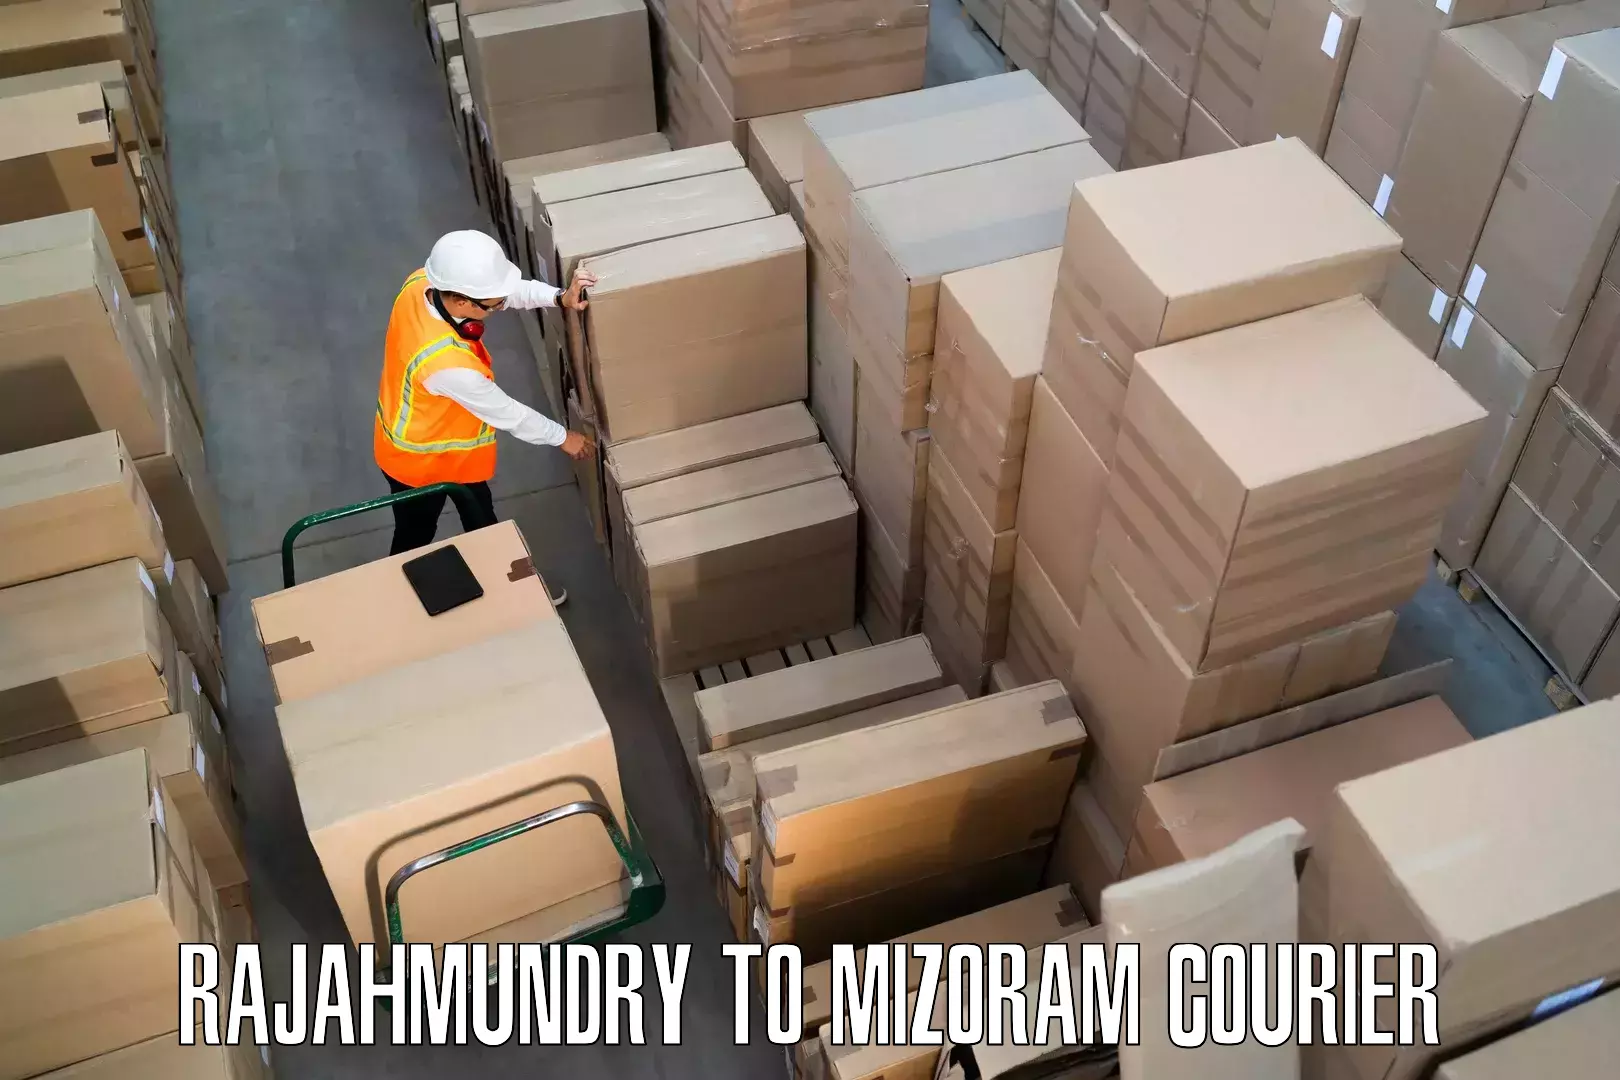 Furniture delivery service Rajahmundry to Aizawl